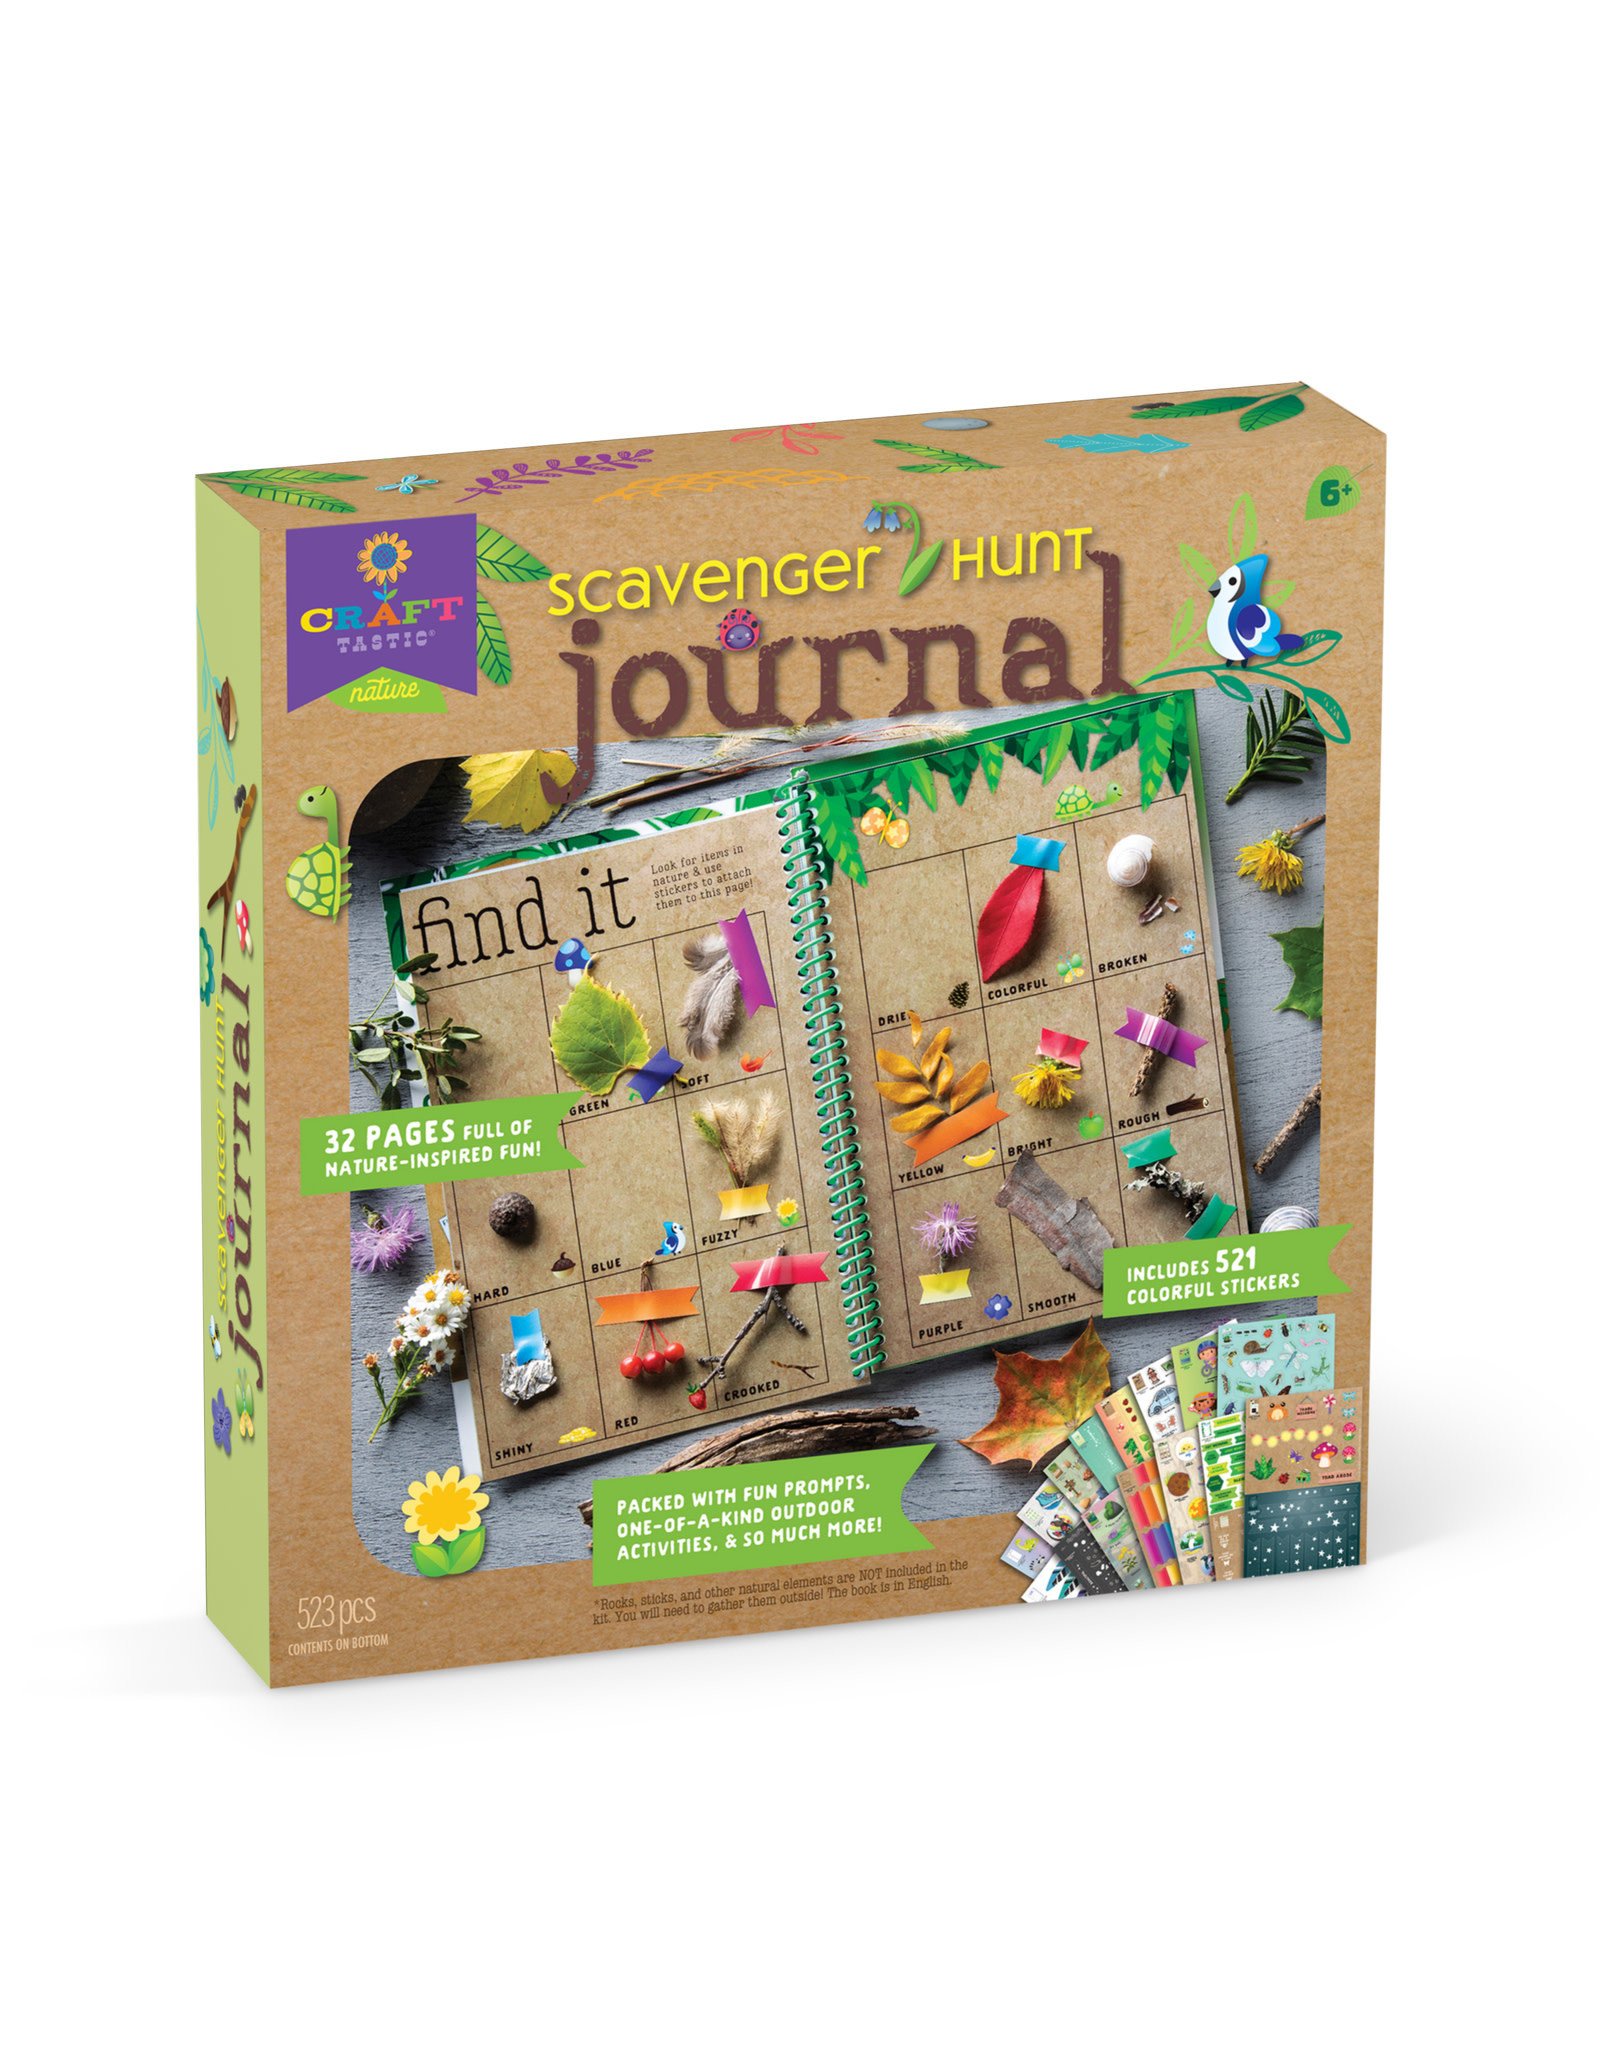 Ann Williams Craft-tastic Nature Scavenger Hunt Journal Kit, 523-Piece Kit